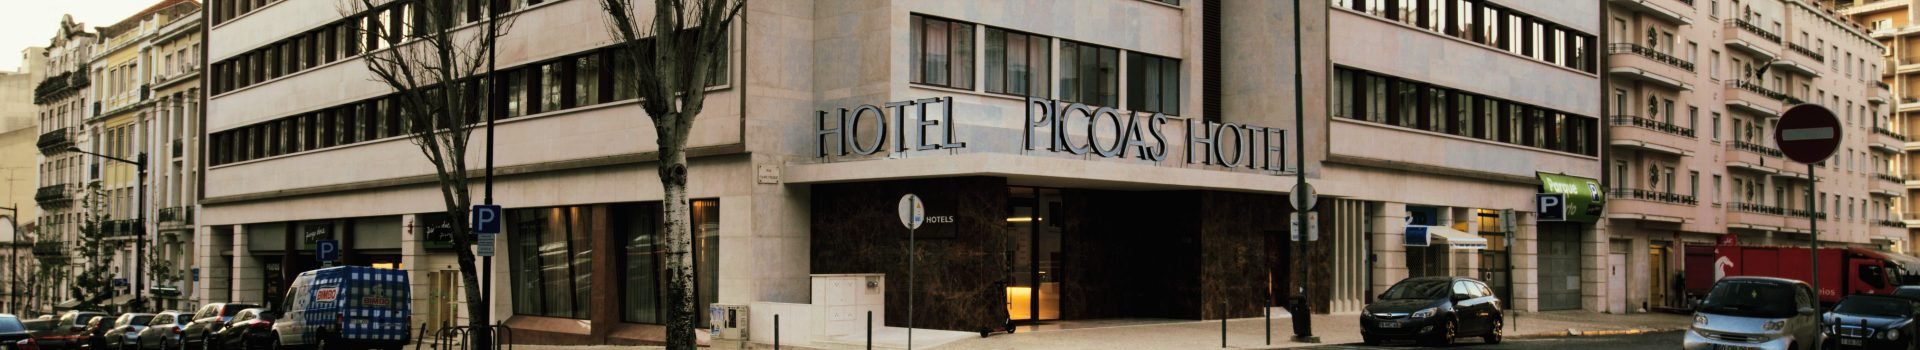 Location & Contact VIP Executive Picoas Hotel Lisbon